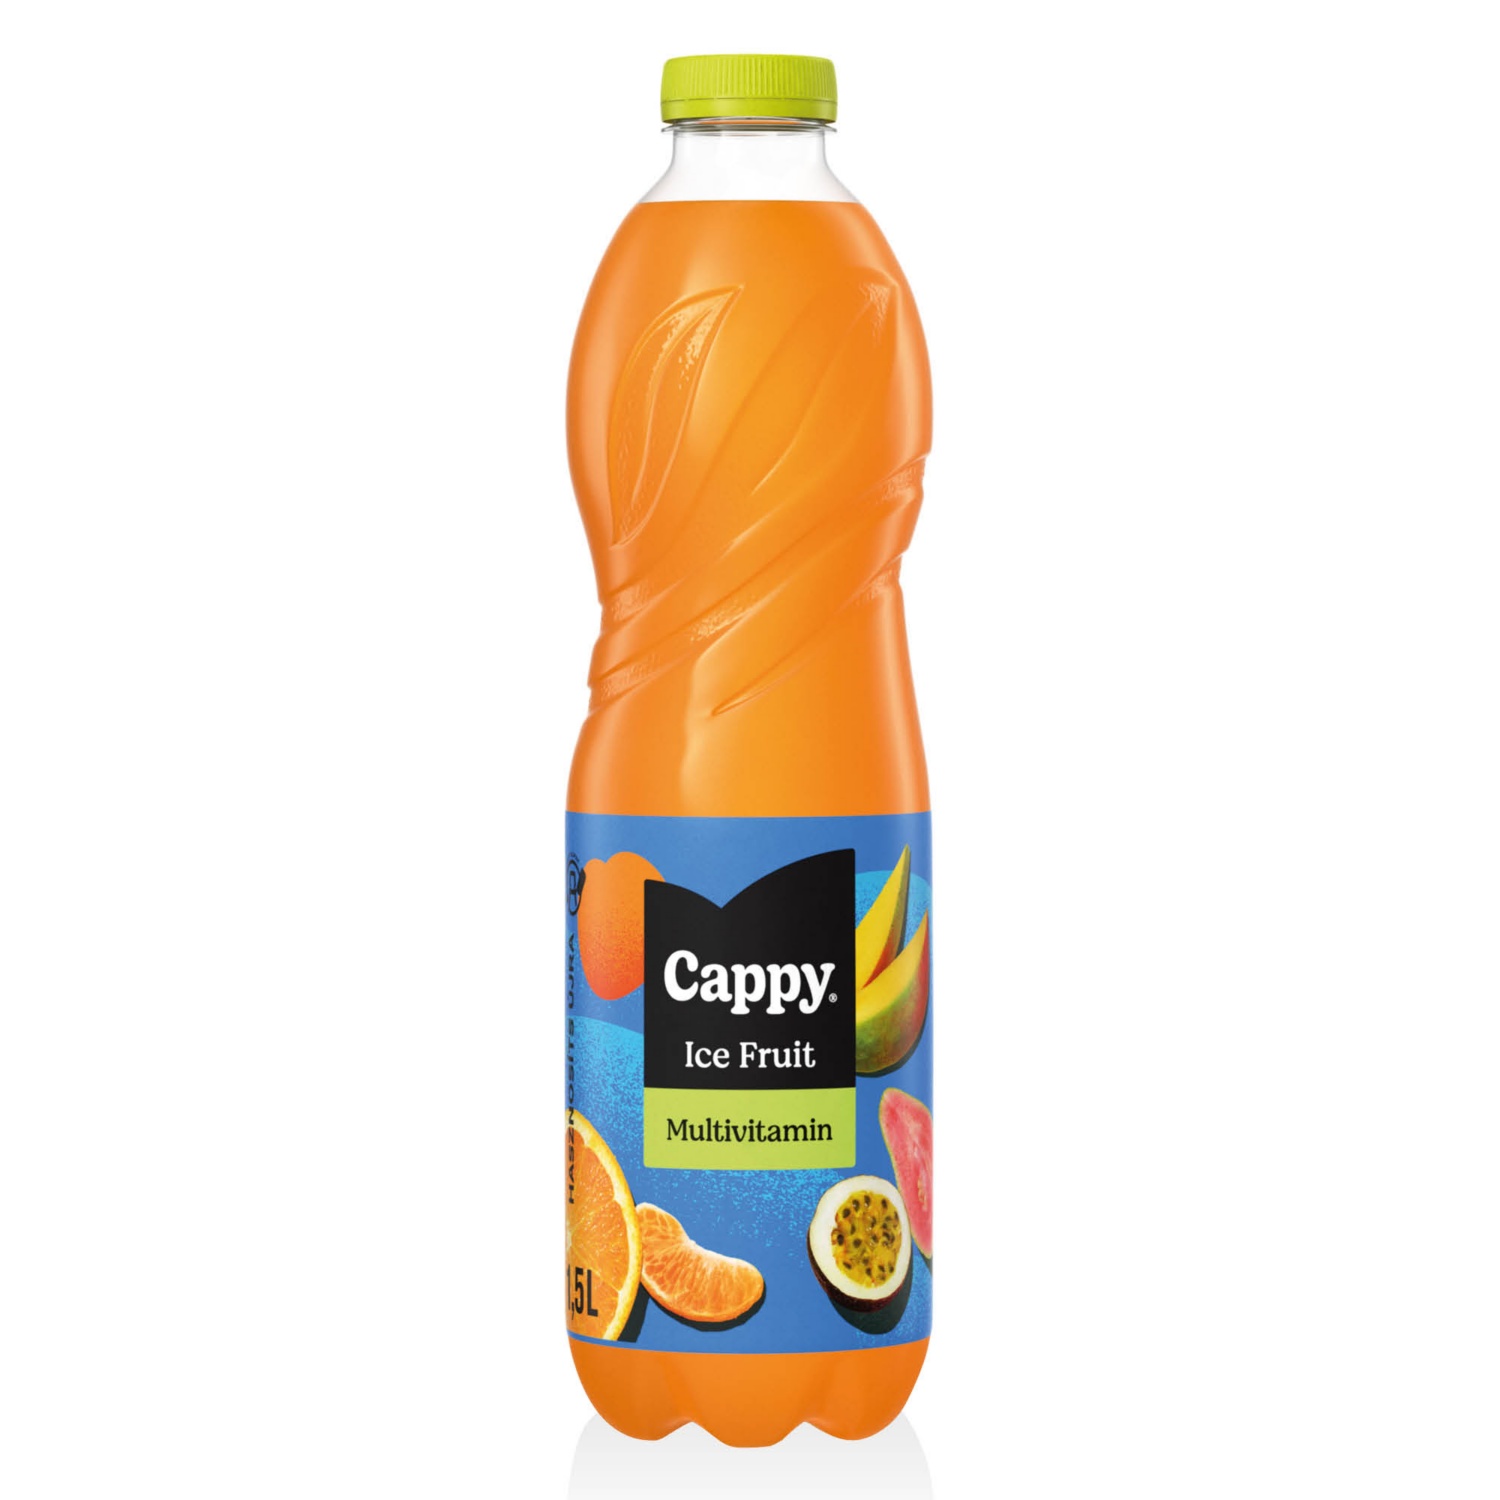 CAPPY Ice Fruit gyümölcsital, 1,5 l, multivitamin